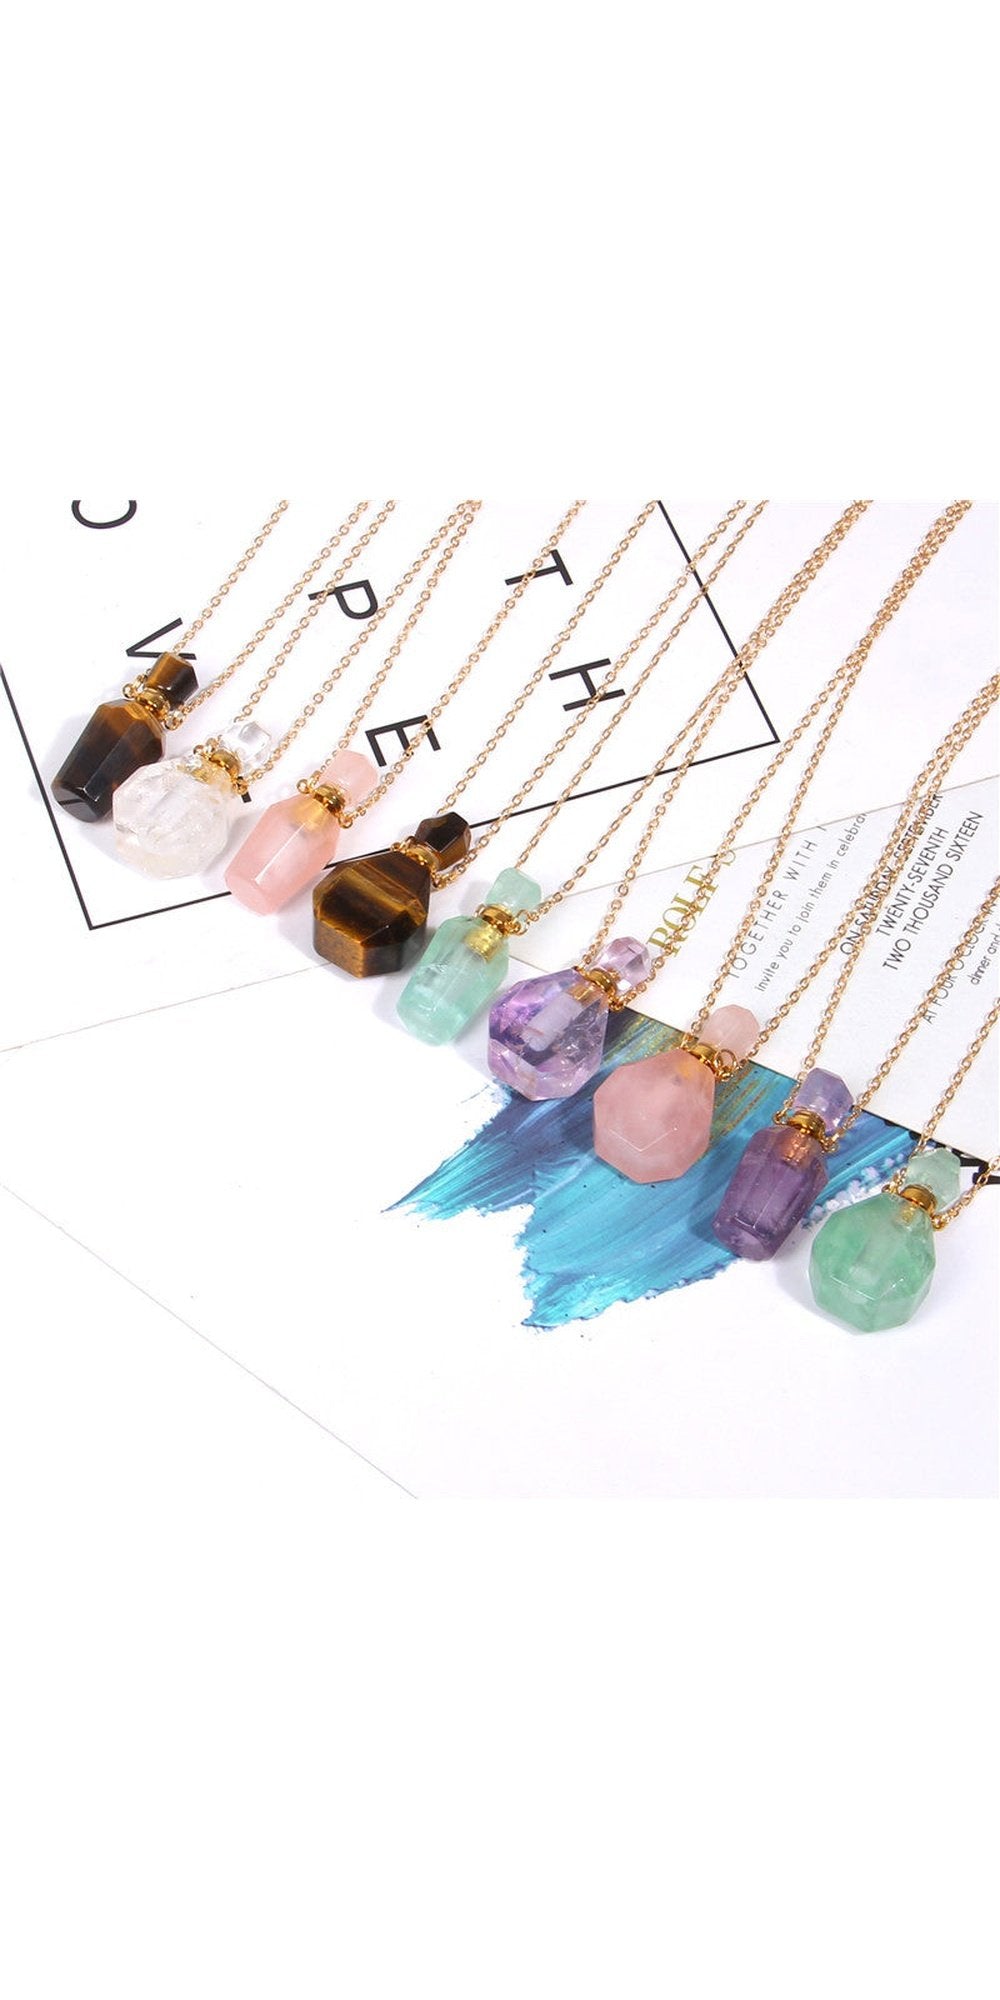 Perfume bottle crystal pendant necklace